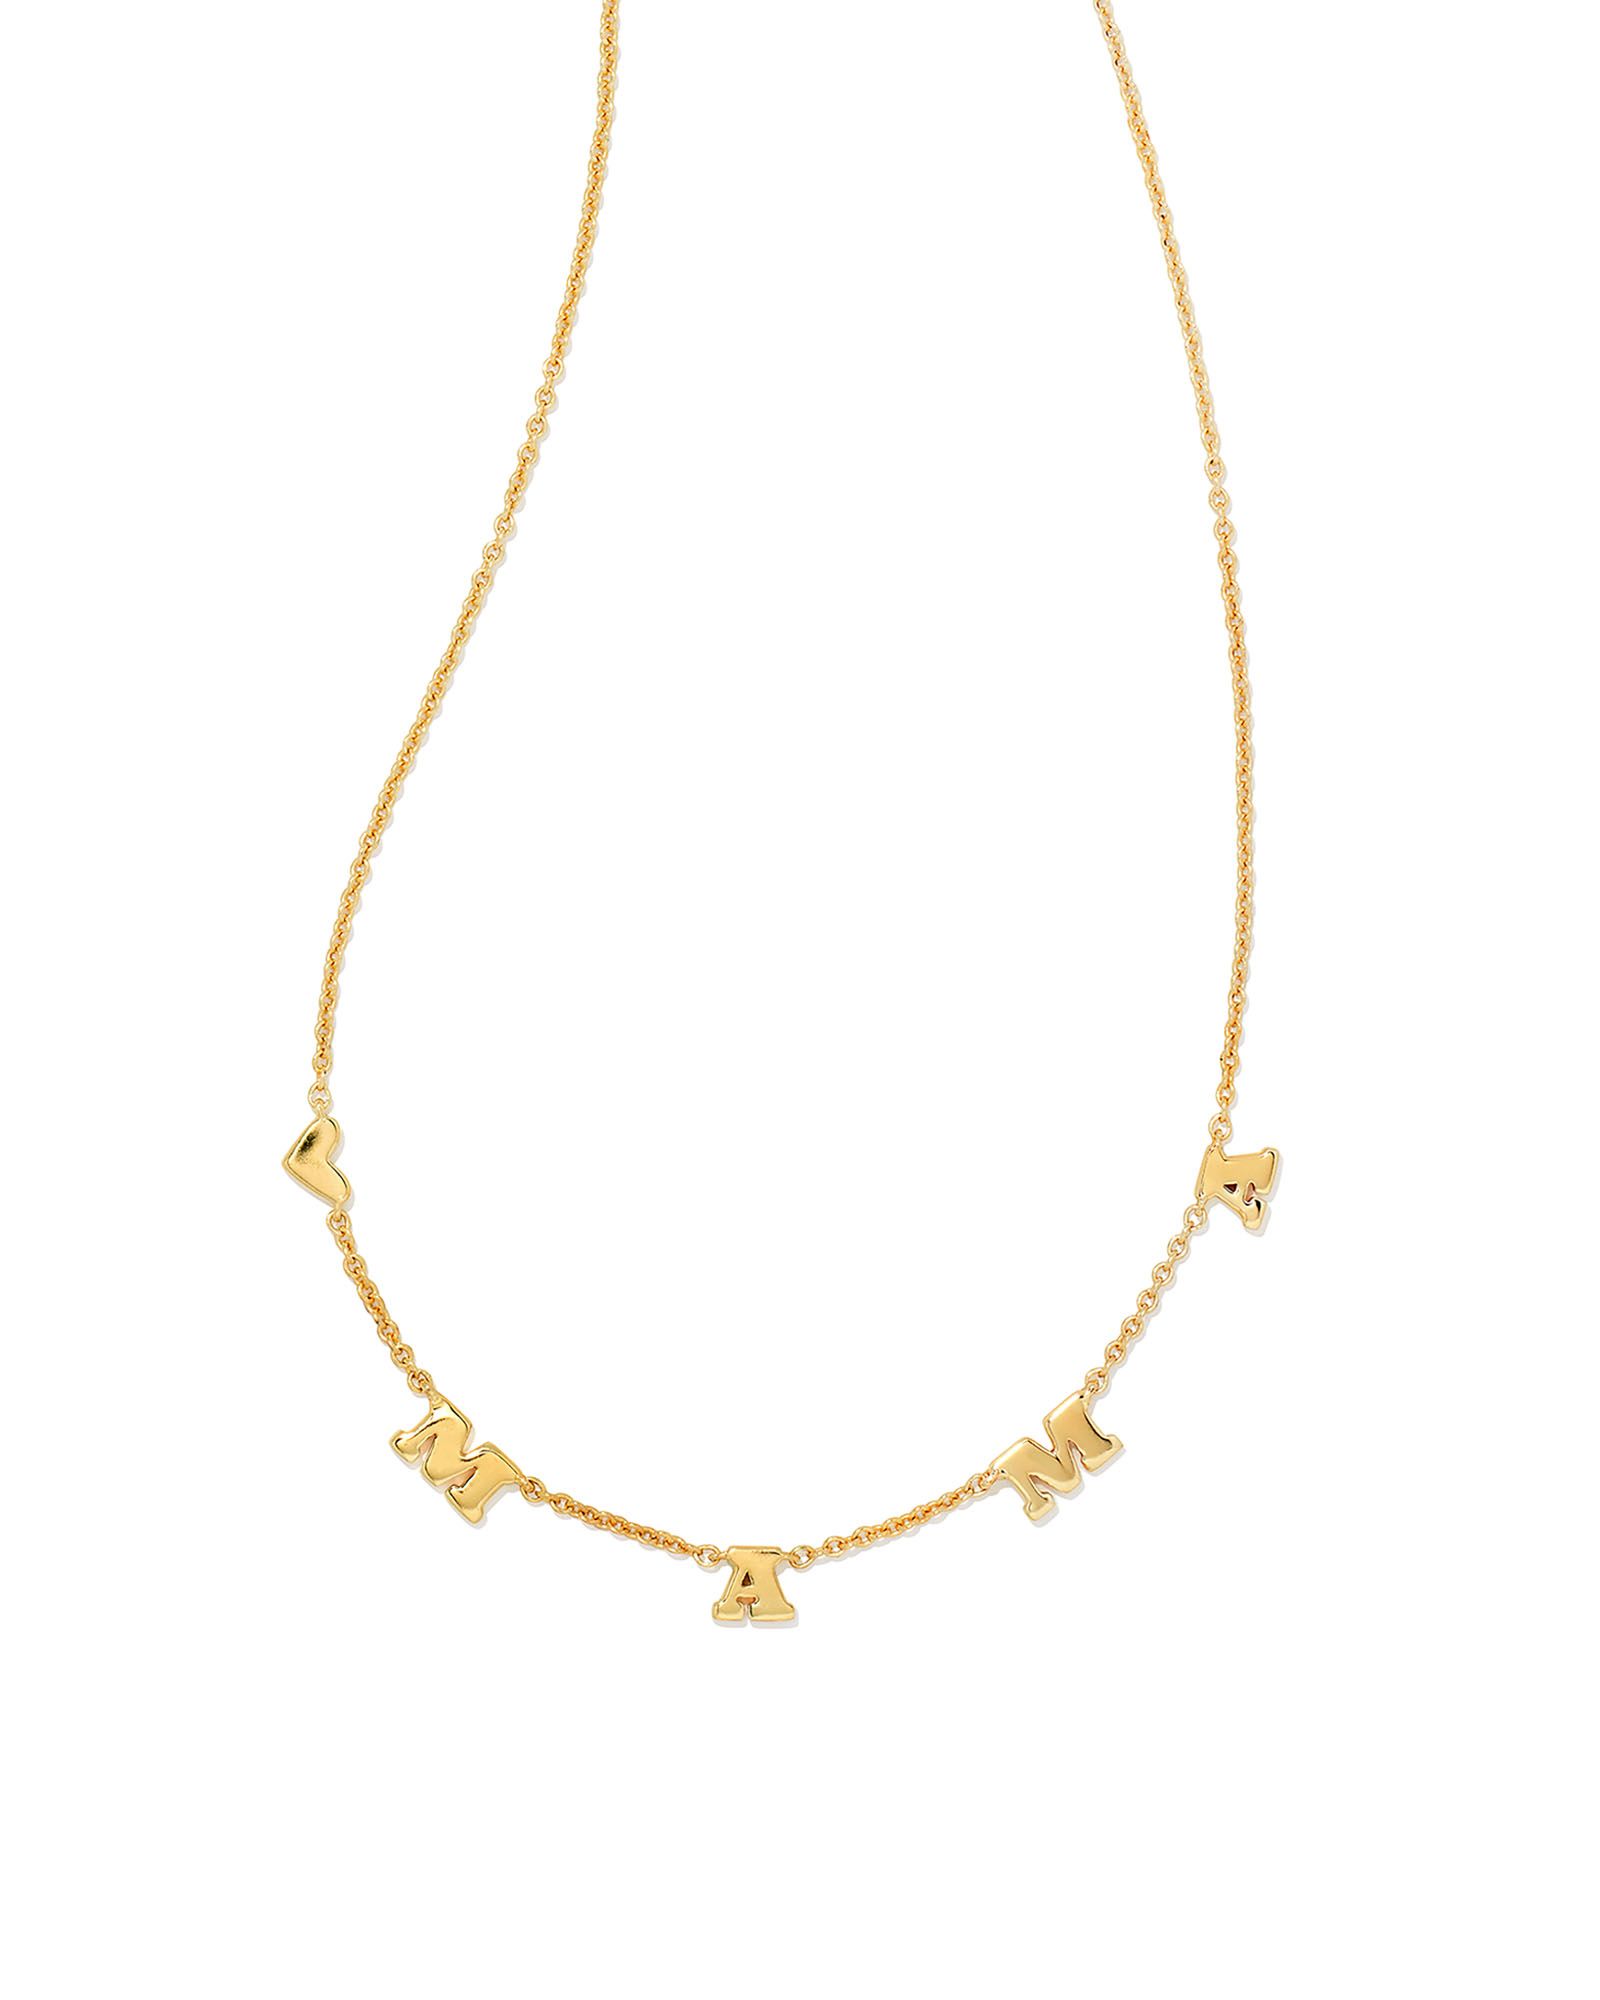 Mama Strand Necklace in Gold | Kendra Scott | Kendra Scott